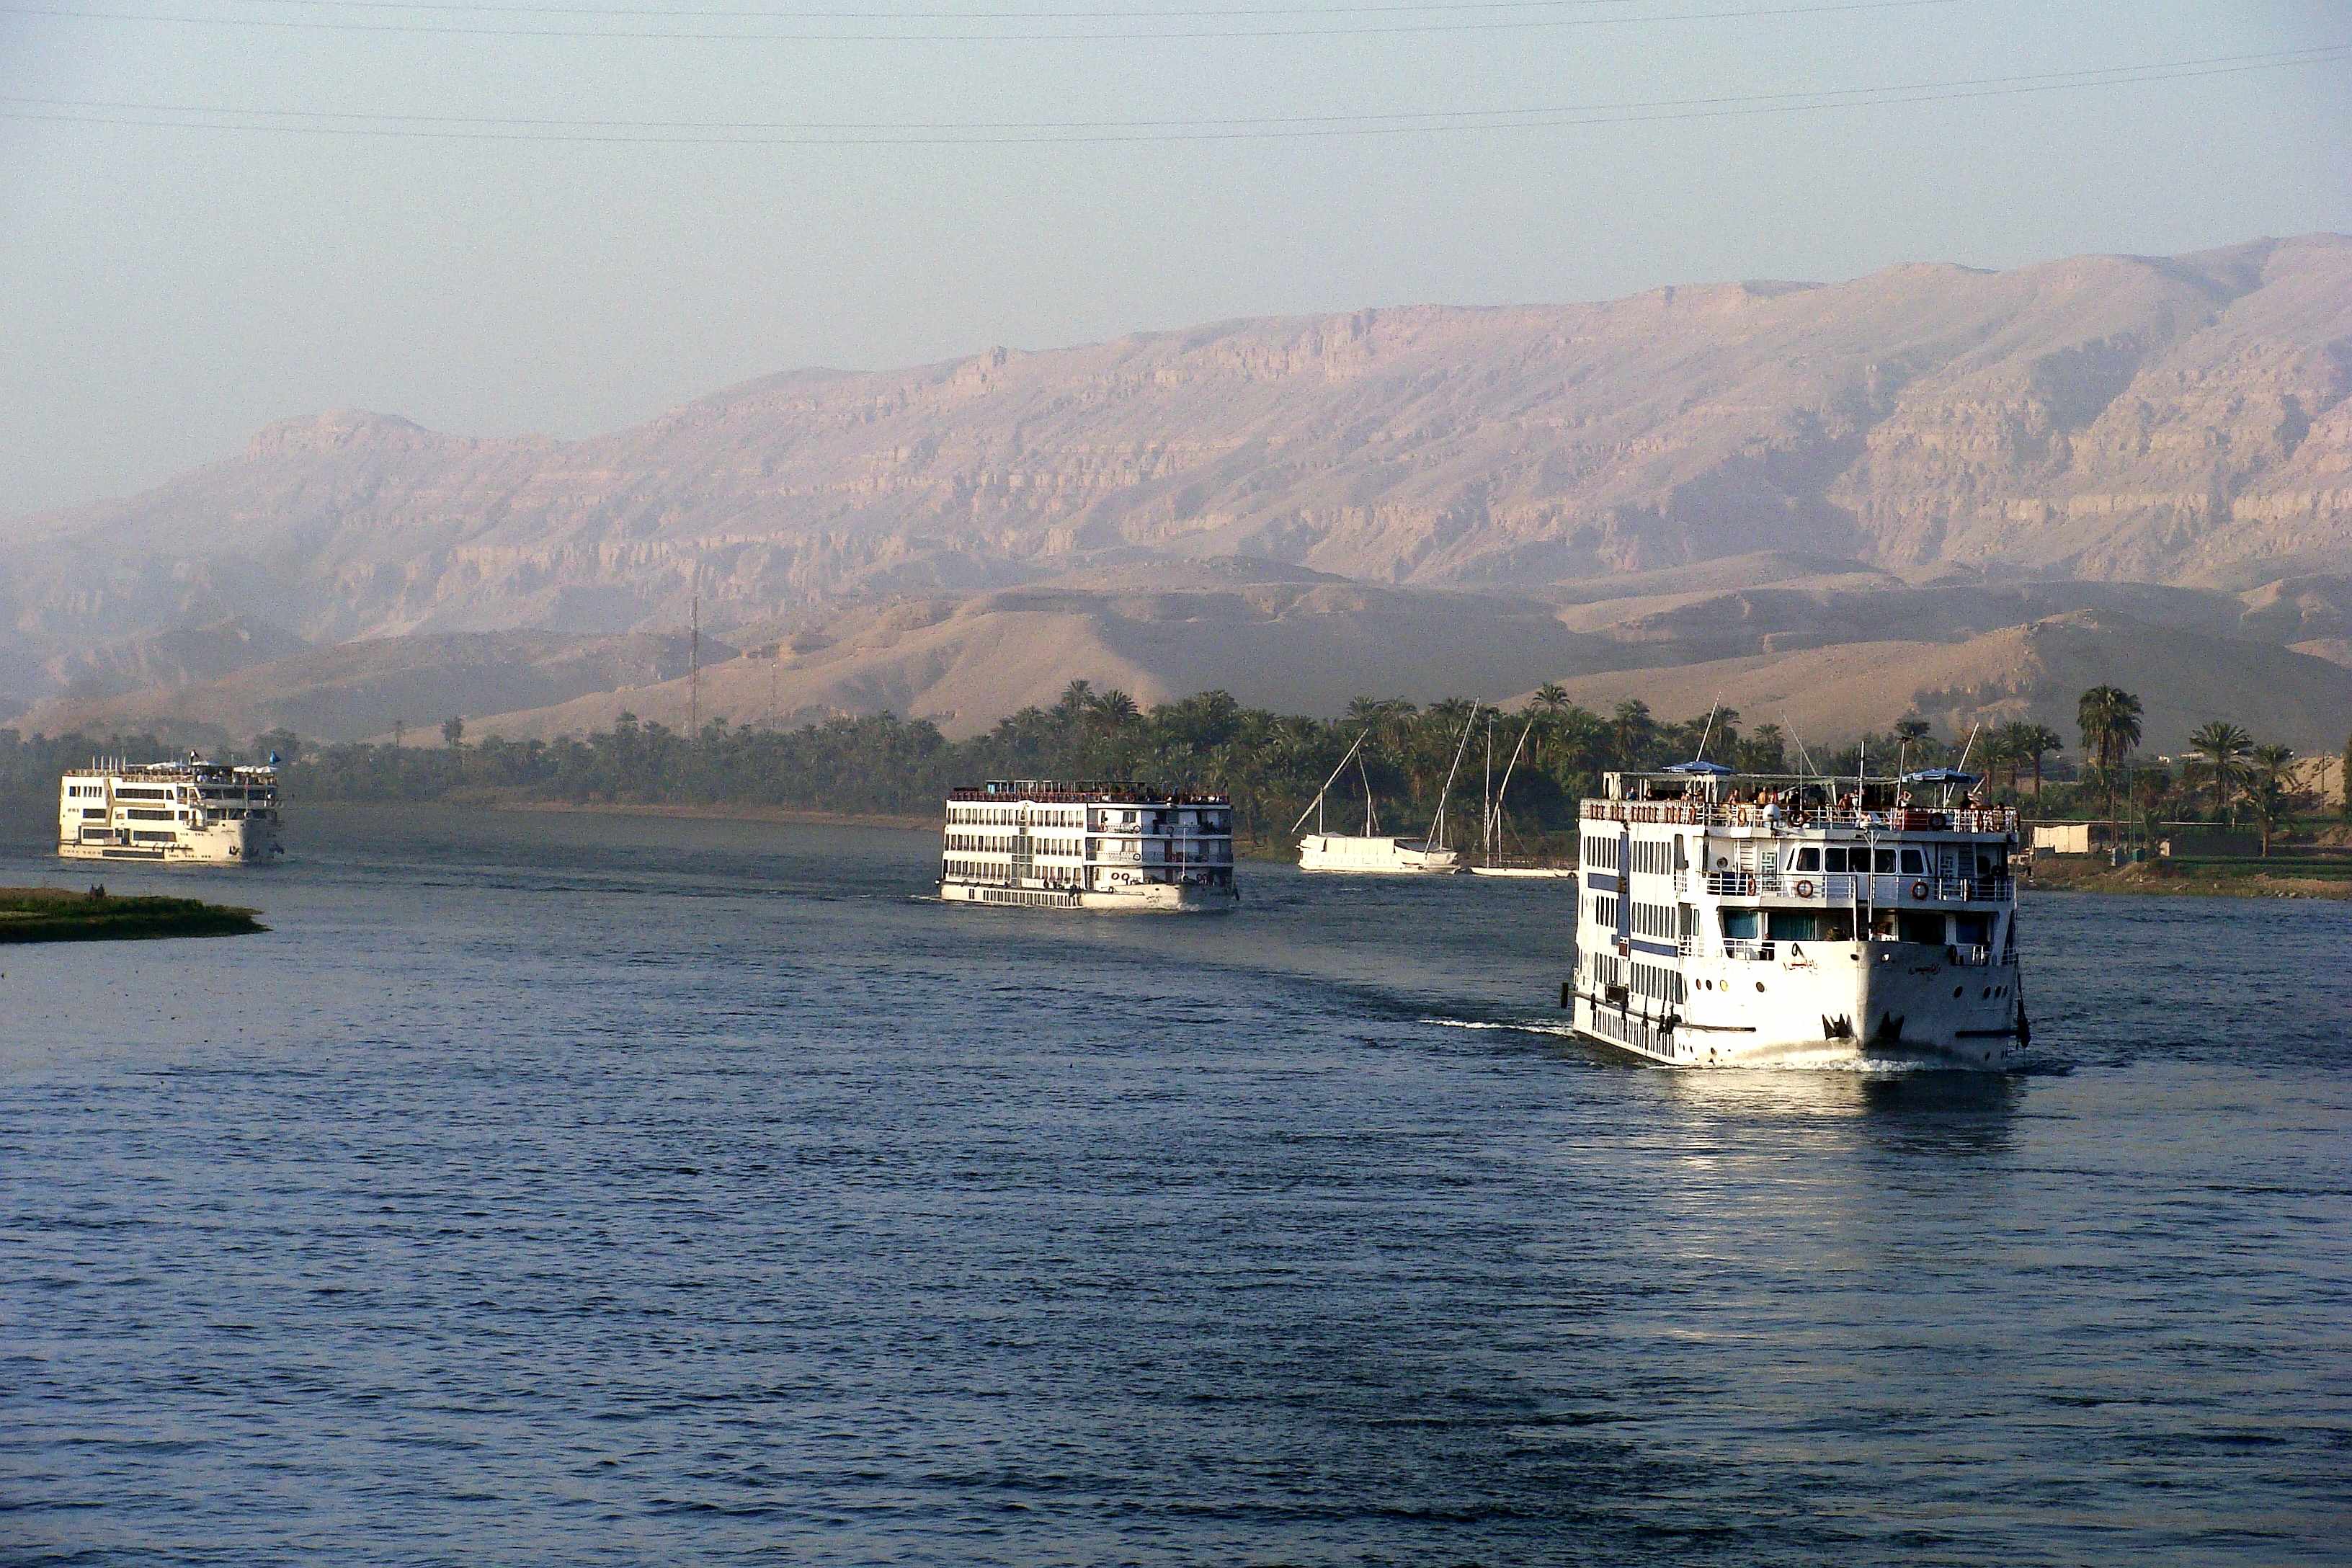 008 Passenger ships of Egypt, Edfu, Nile river 2010